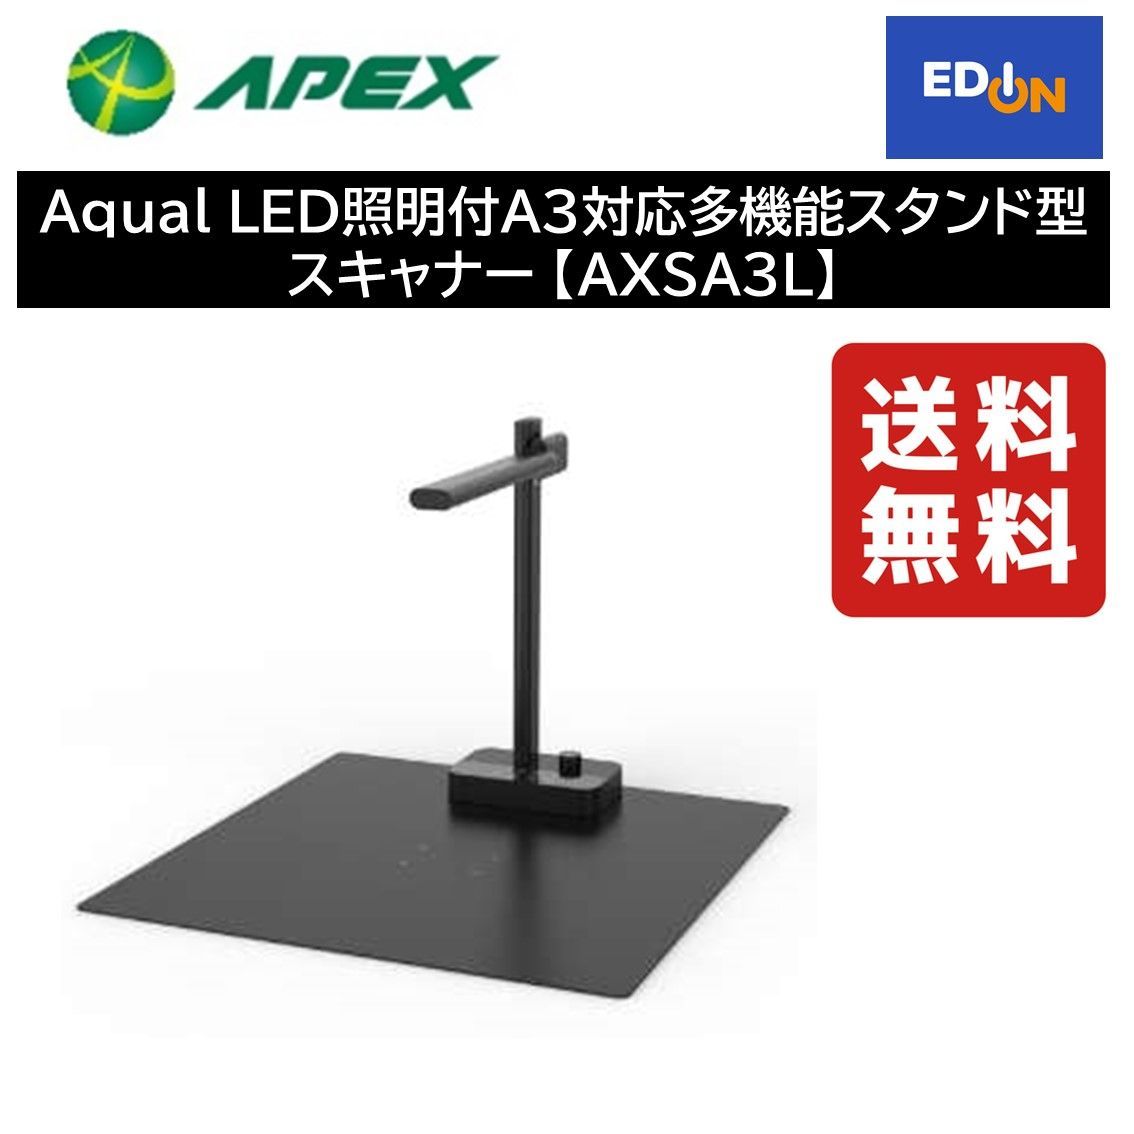 11917】Aqual LED照明付A3対応多機能スタンド型スキャナー 【AXSA3L